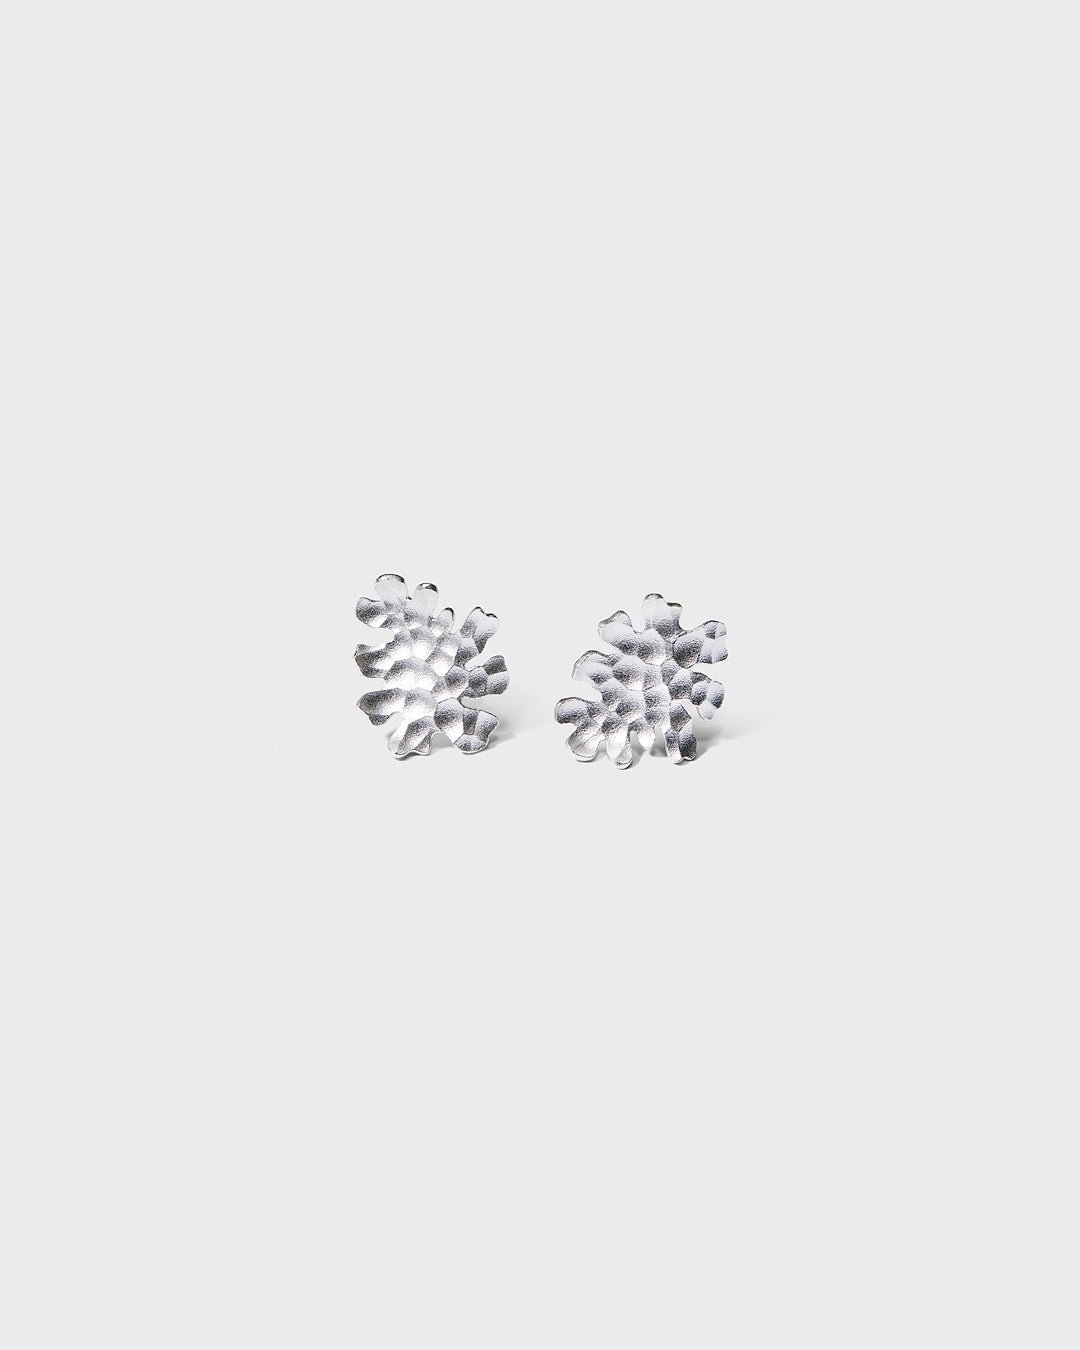 Tundra earrings small silver half pair left